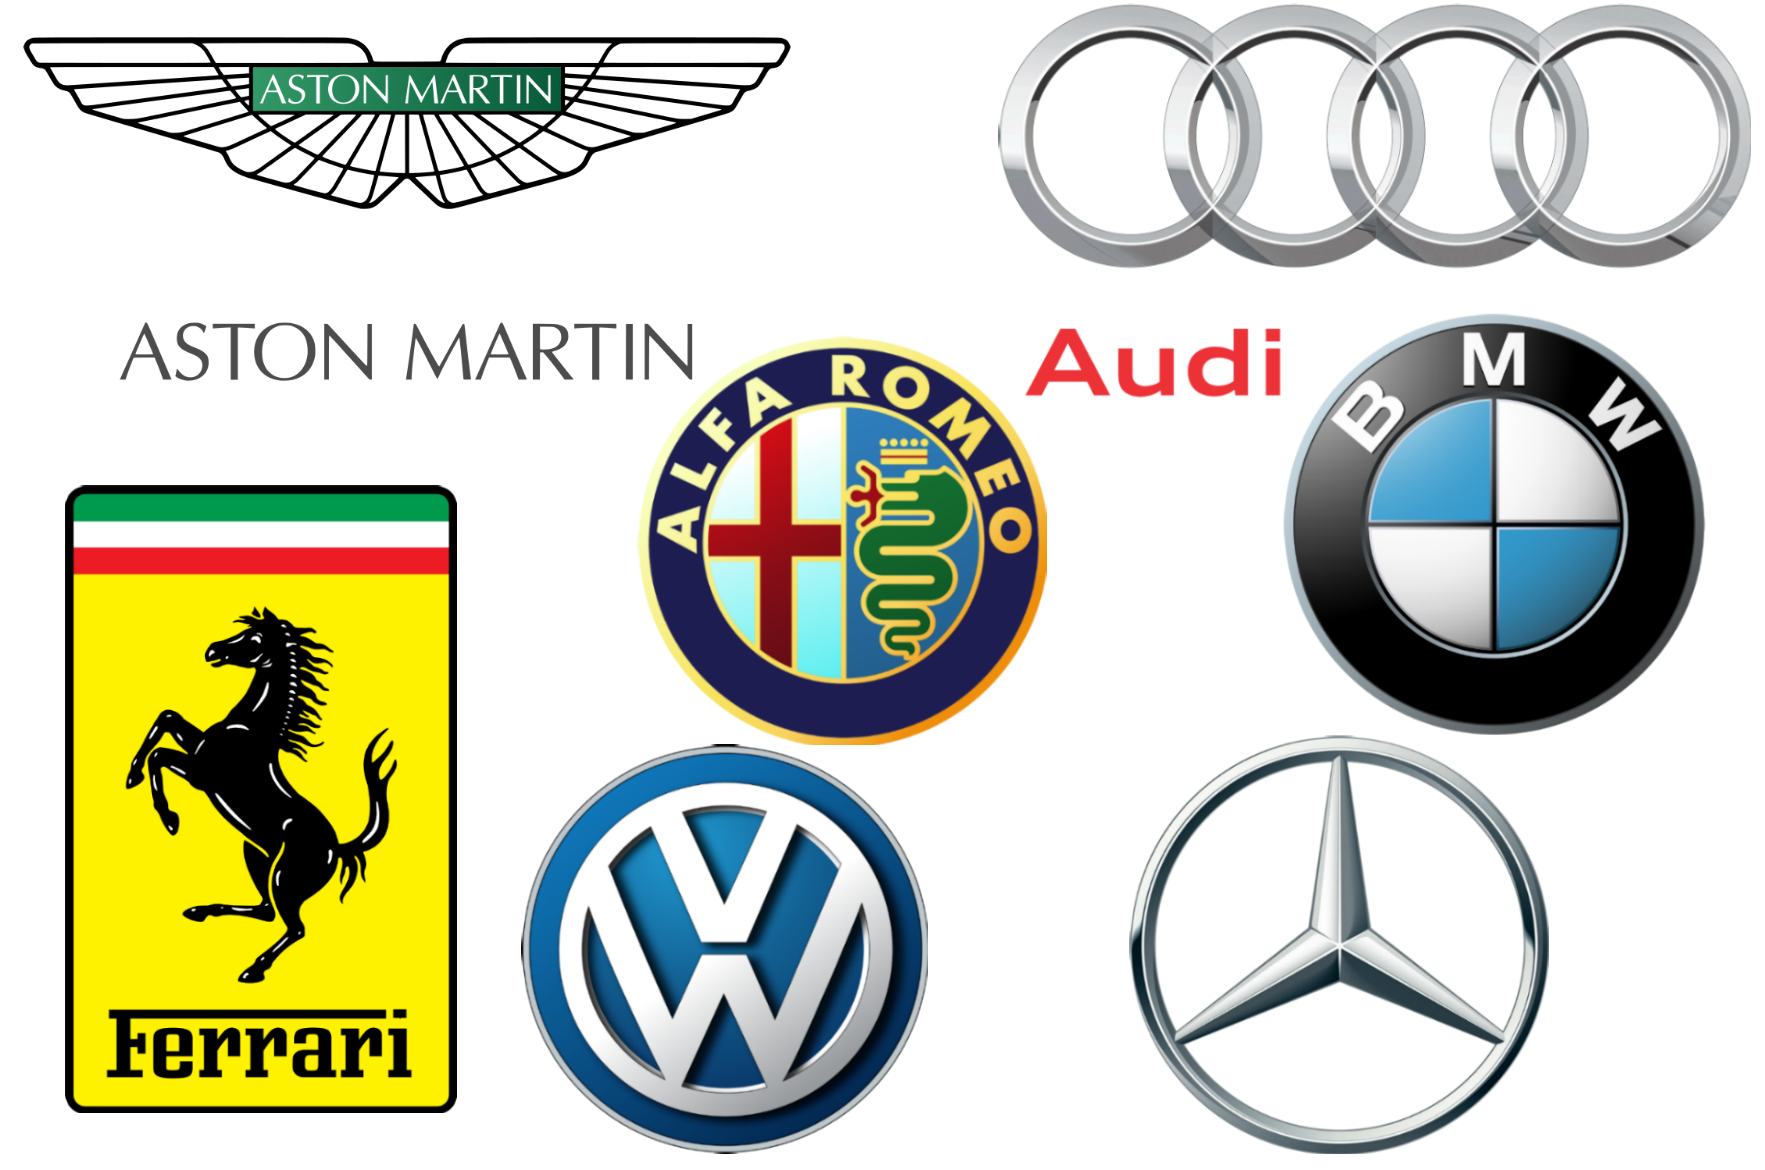 European-car-brands-logos-perth-banner